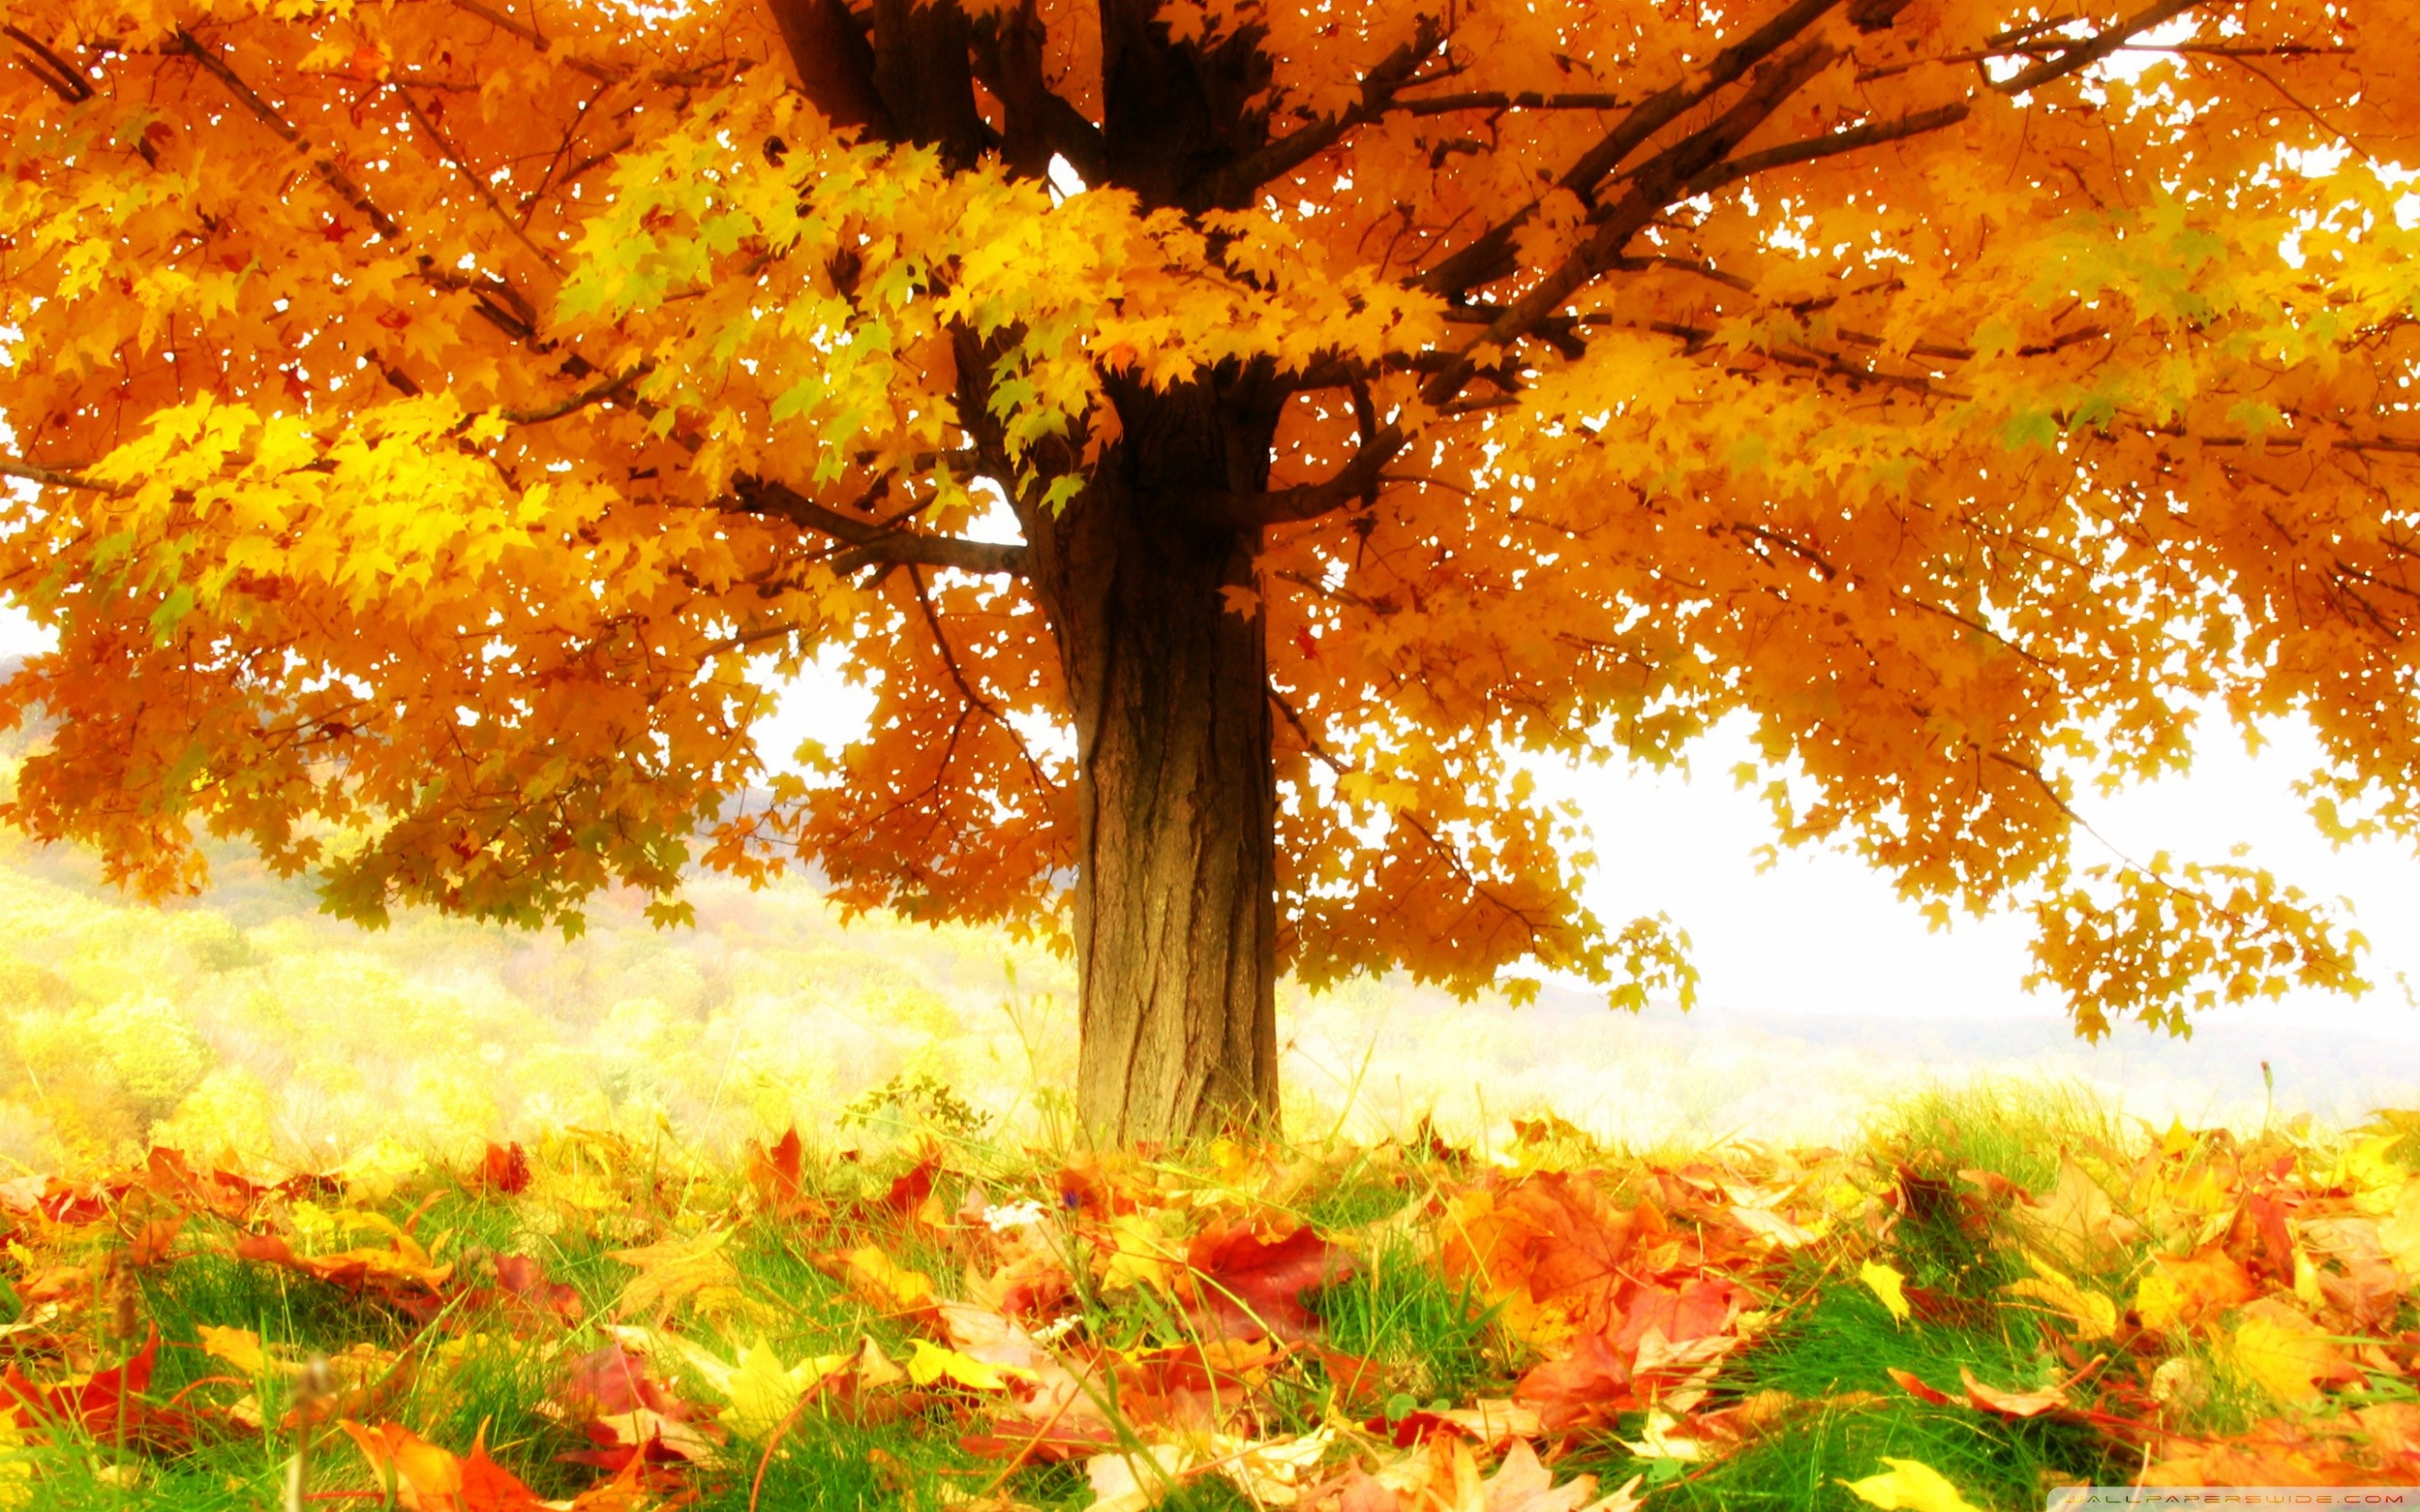 Download wallpaper 1350x2400 girl umbrella anime kimono garden autumn  iphone 876s6 for parallax hd background